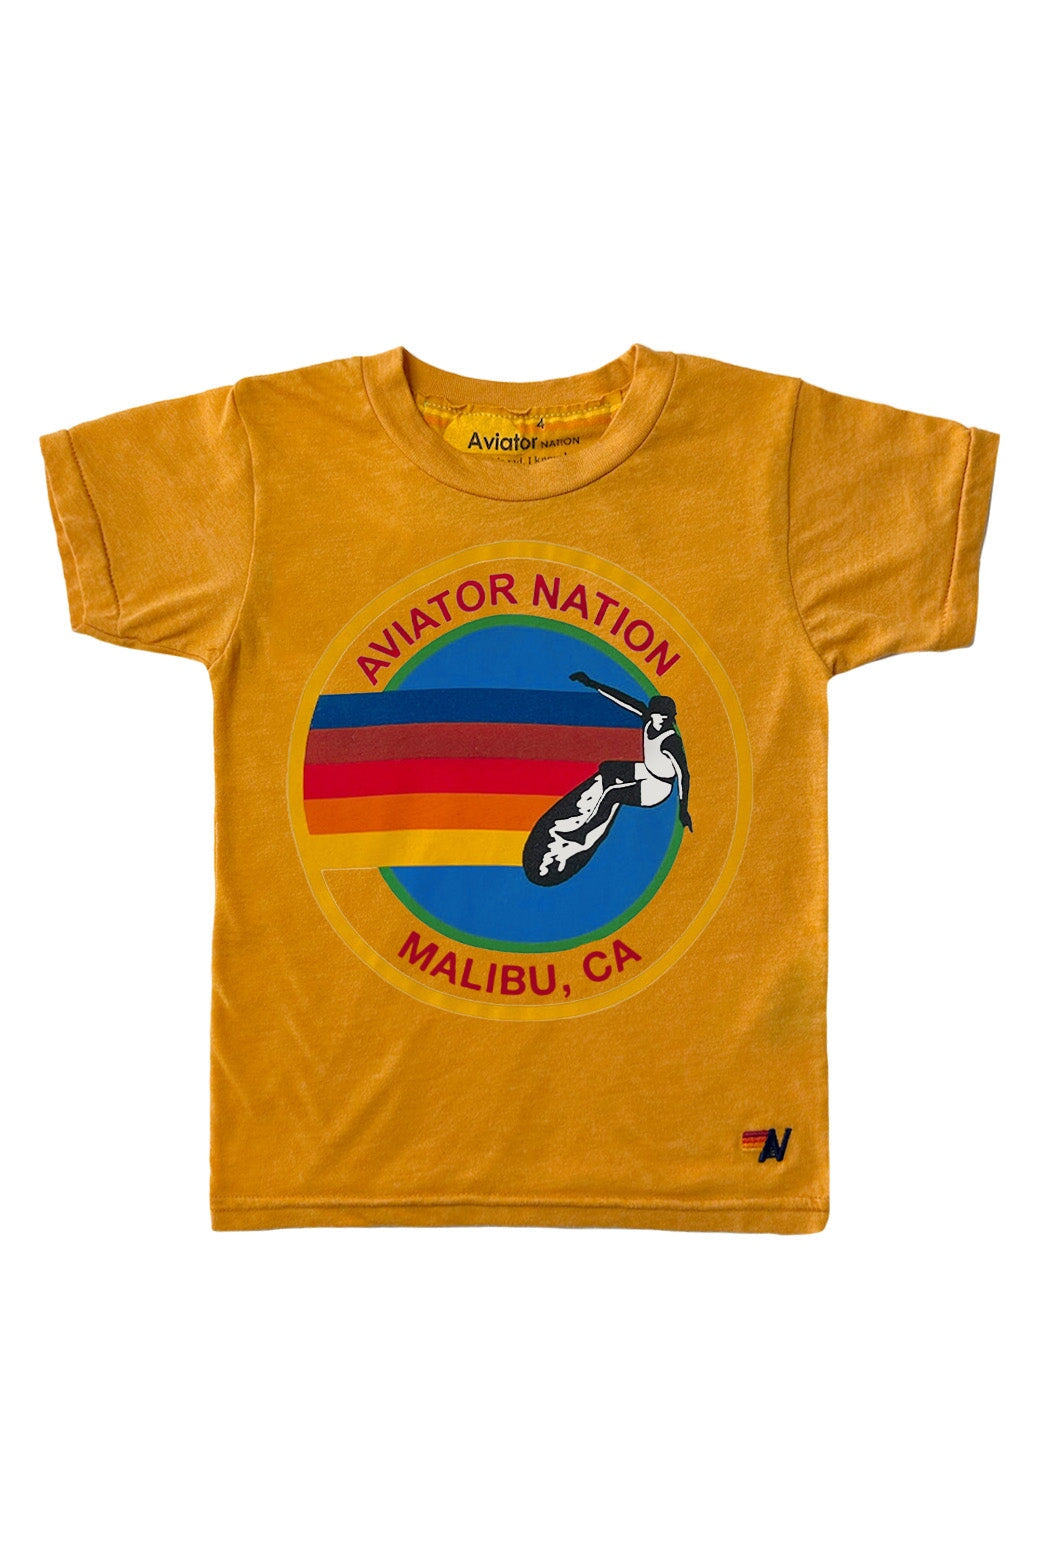 KID'S MALIBU AVIATOR NATION TEE - GOLD Kid's Tee Aviator Nation 